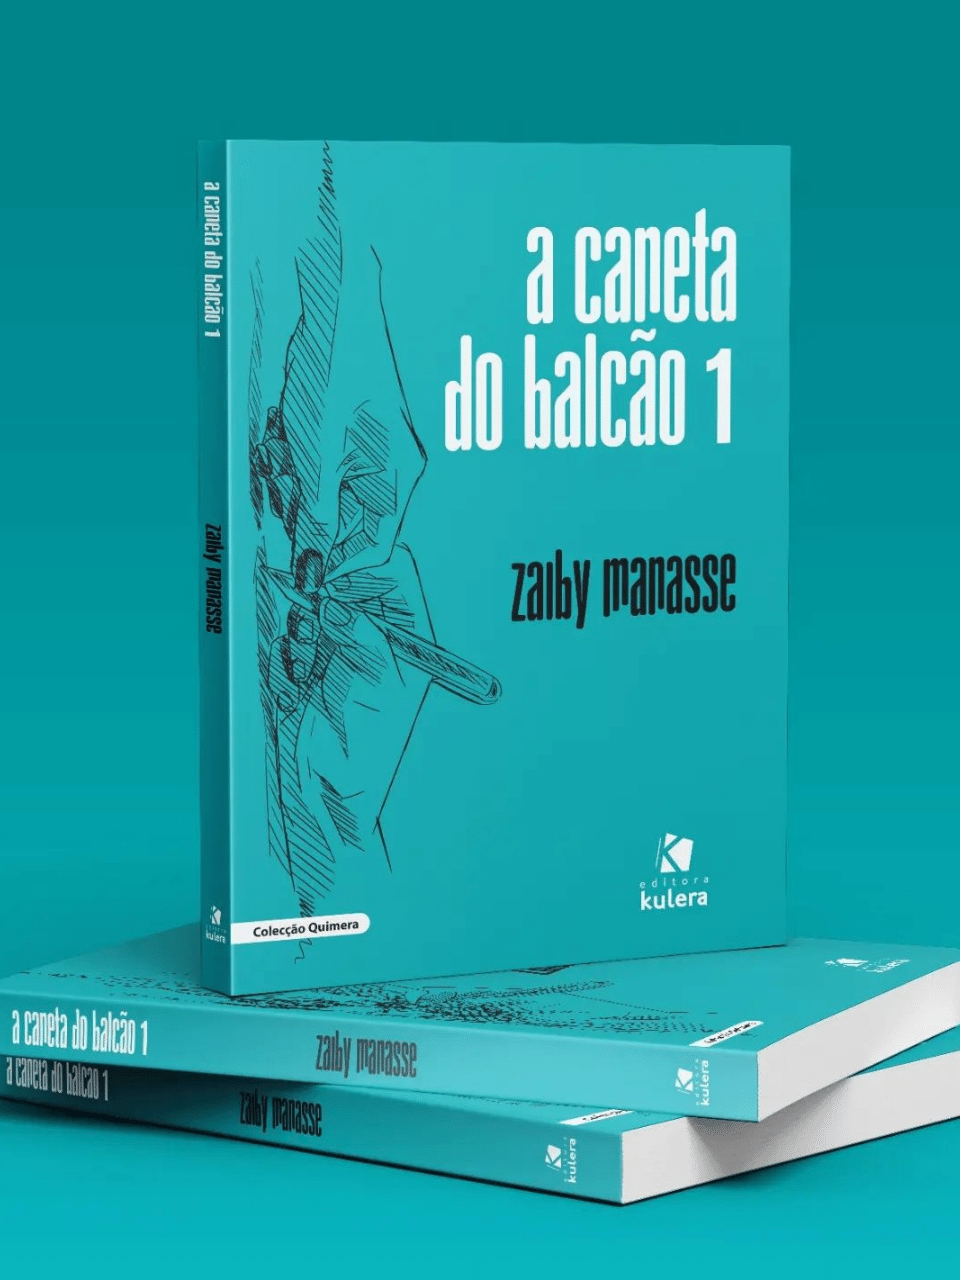 a blue book titled a caneta do balcao 1